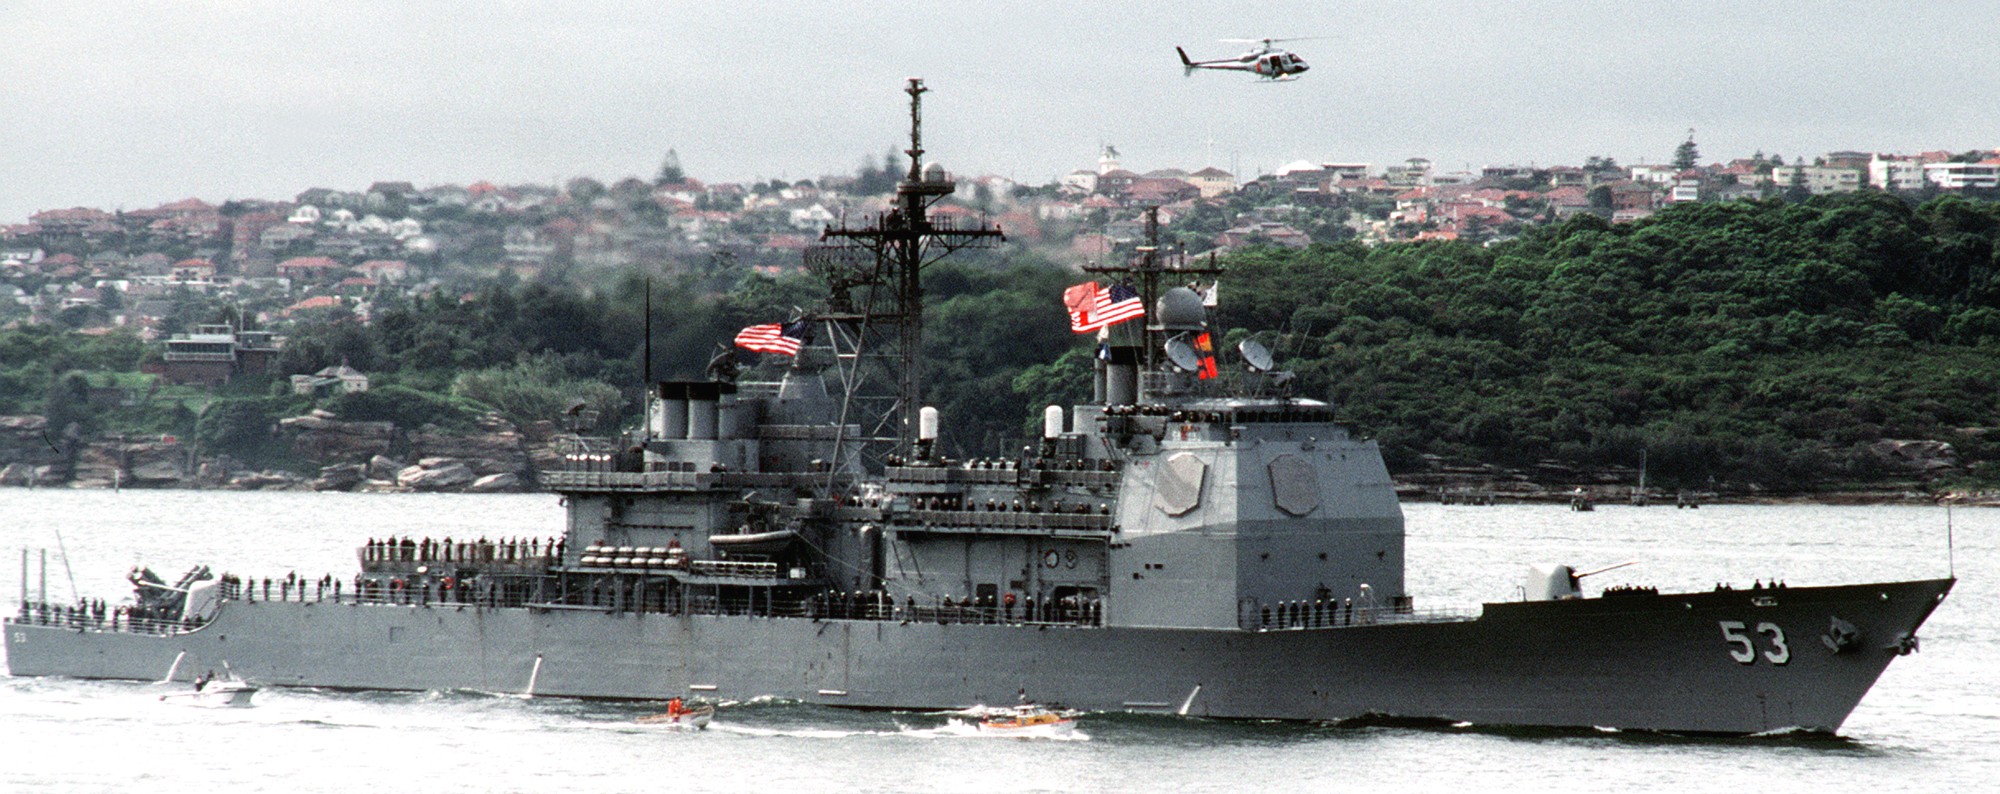 cg-53 uss mobile bay ticonderoga class guided missile cruiser aegis us navy sydney australia 23